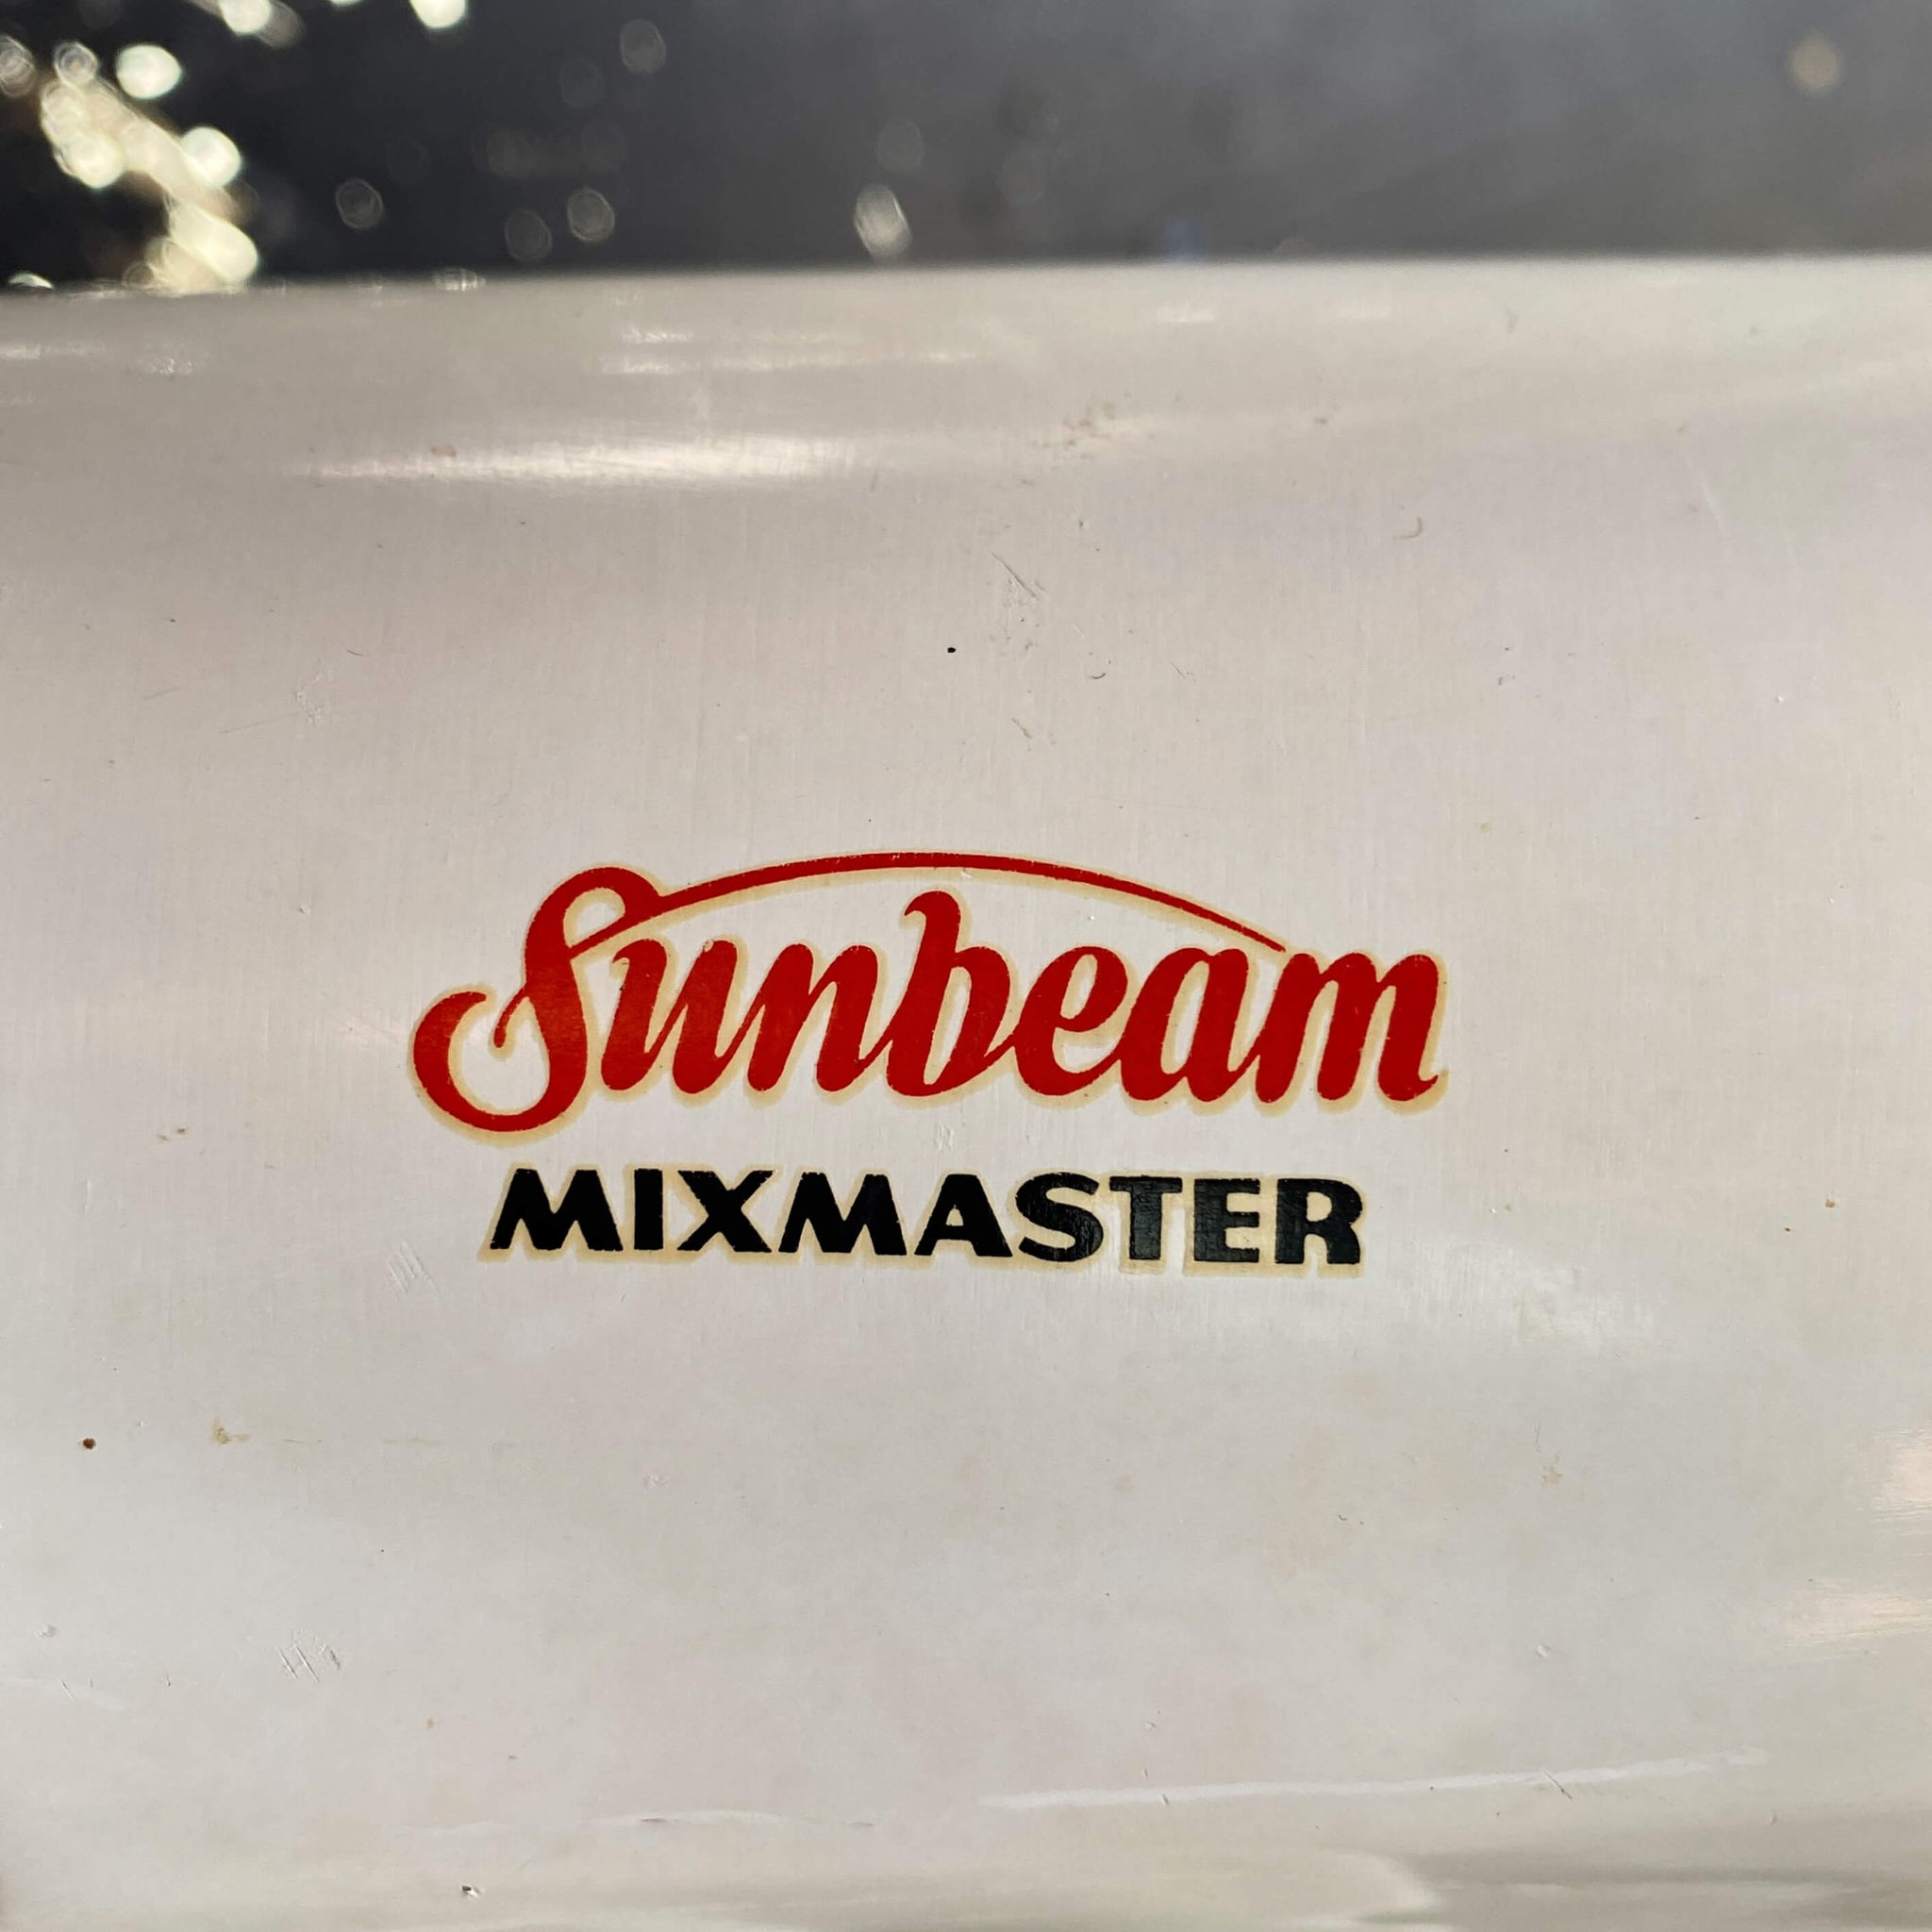 Vintage Sunbeam Mixmaster Service Manual, Models 1 & 3